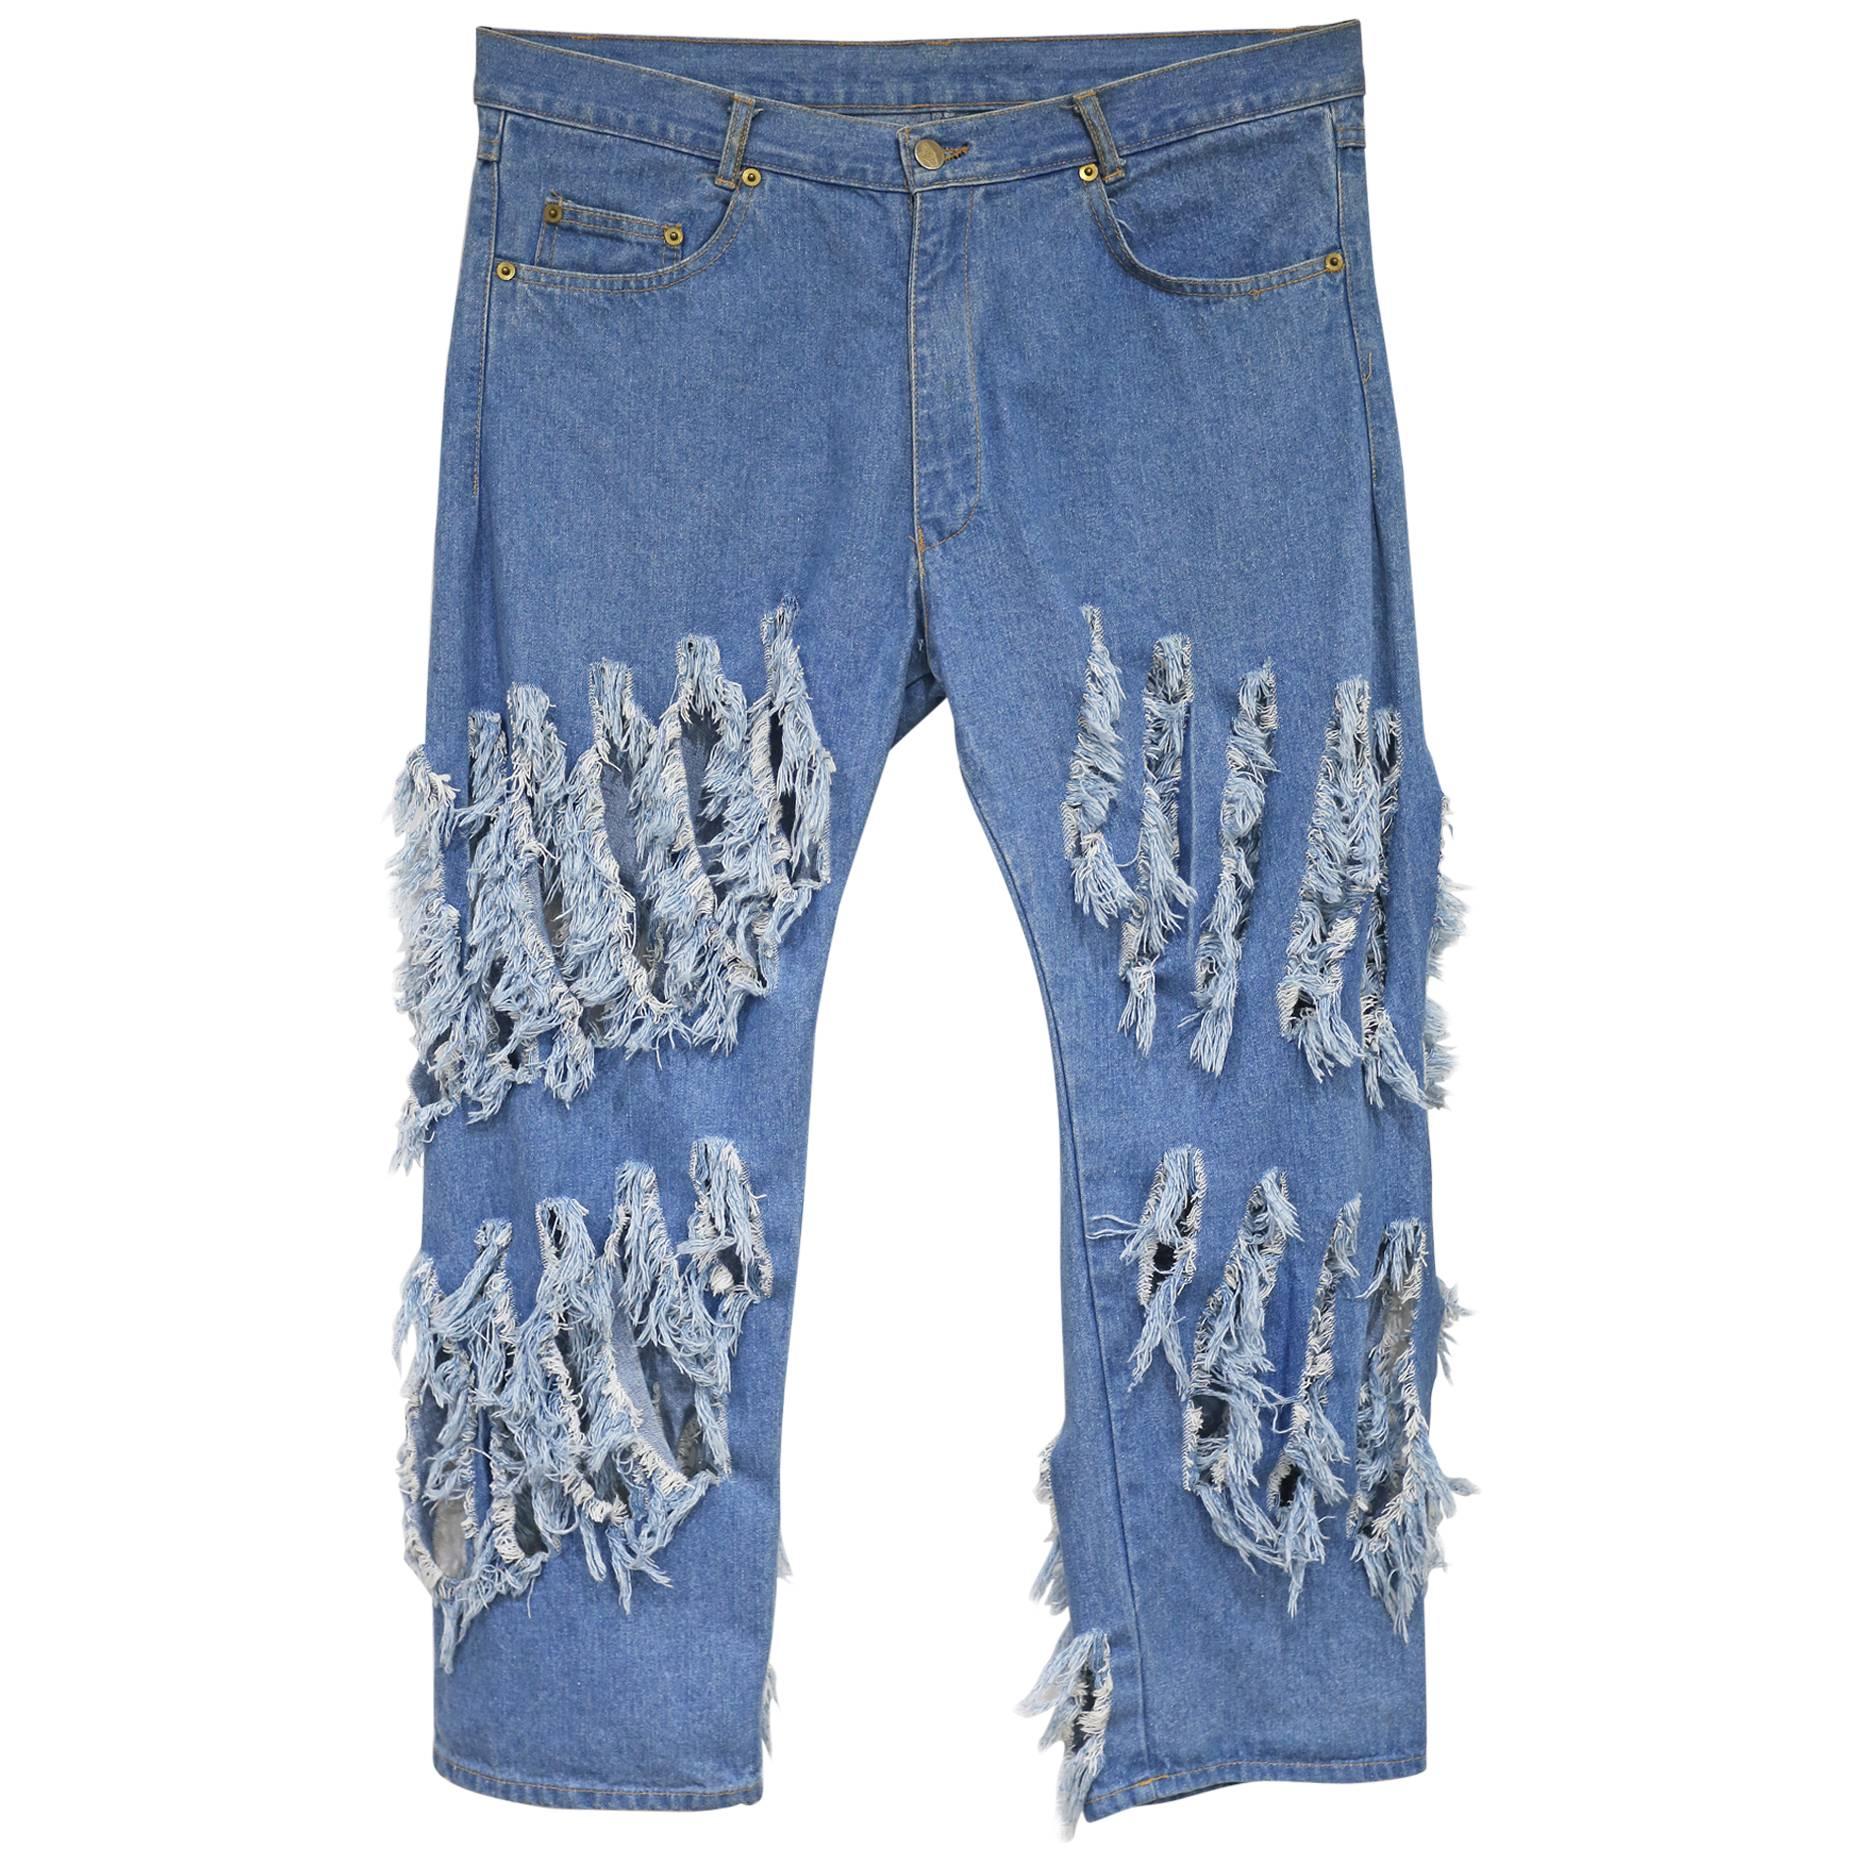 Vivienne Westwood 'CUT AND SLASH' hipster jeans, c. 1991 at 